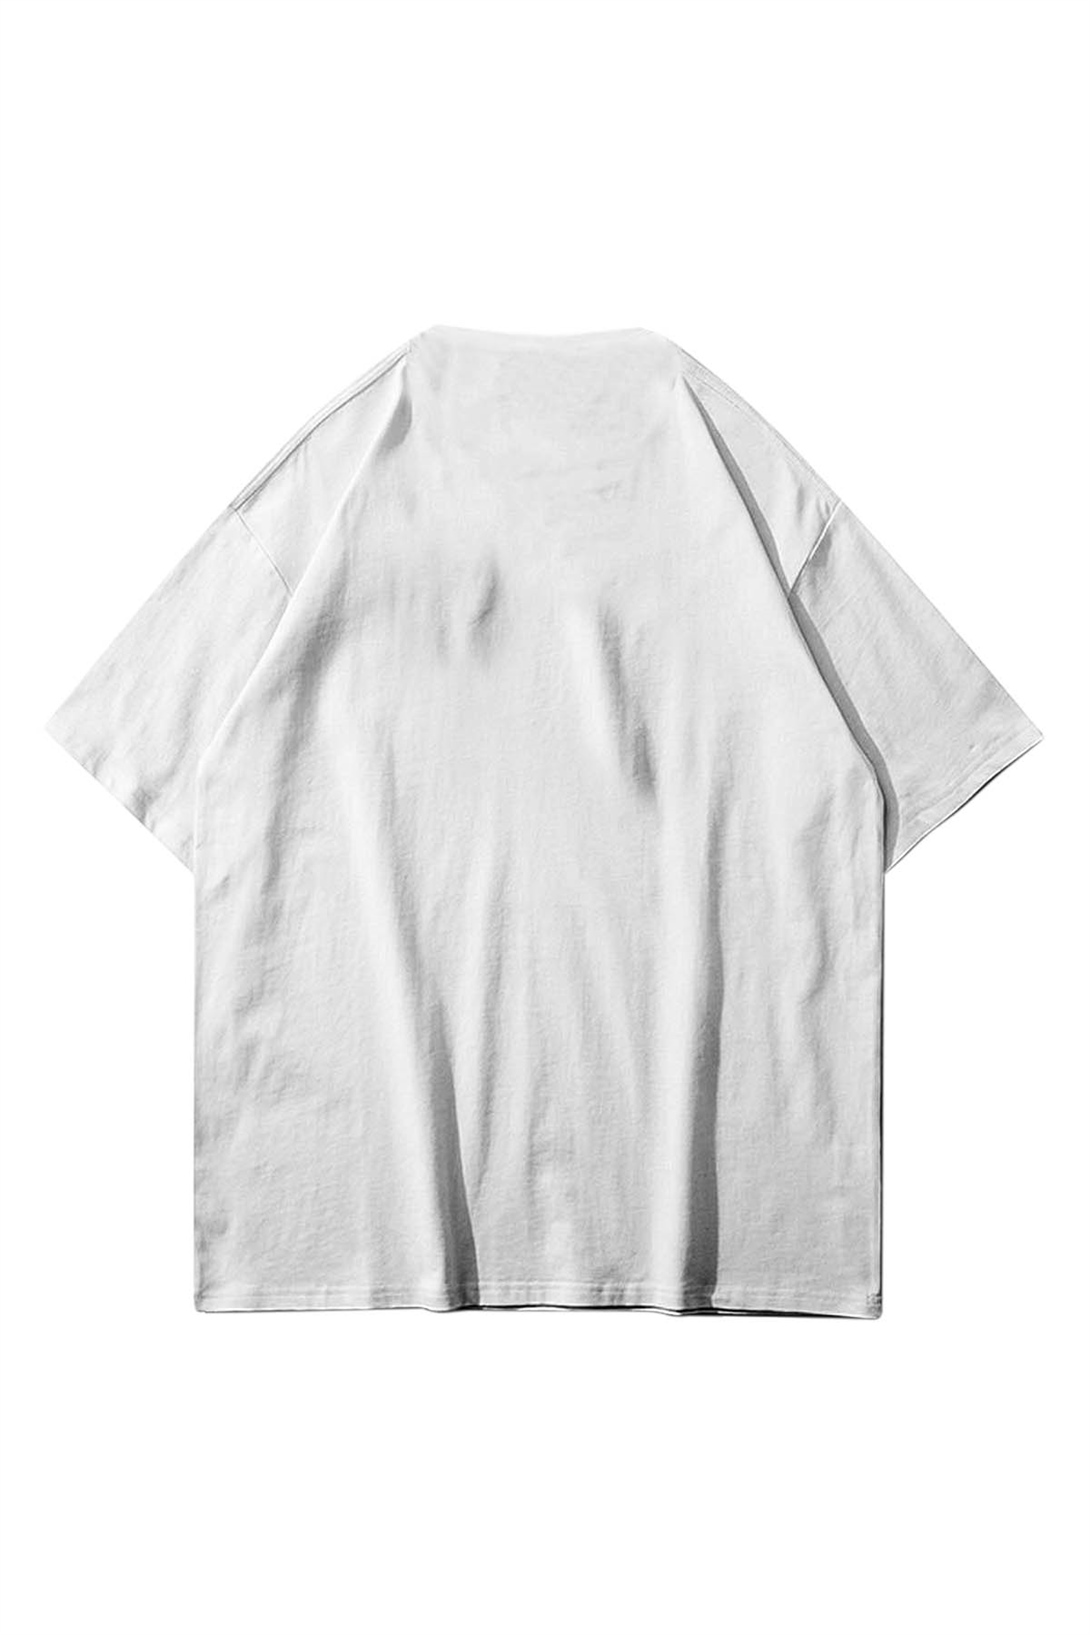 Trendiz Unisex Travis Scott Astroworld 2018 Beyaz Tshirt